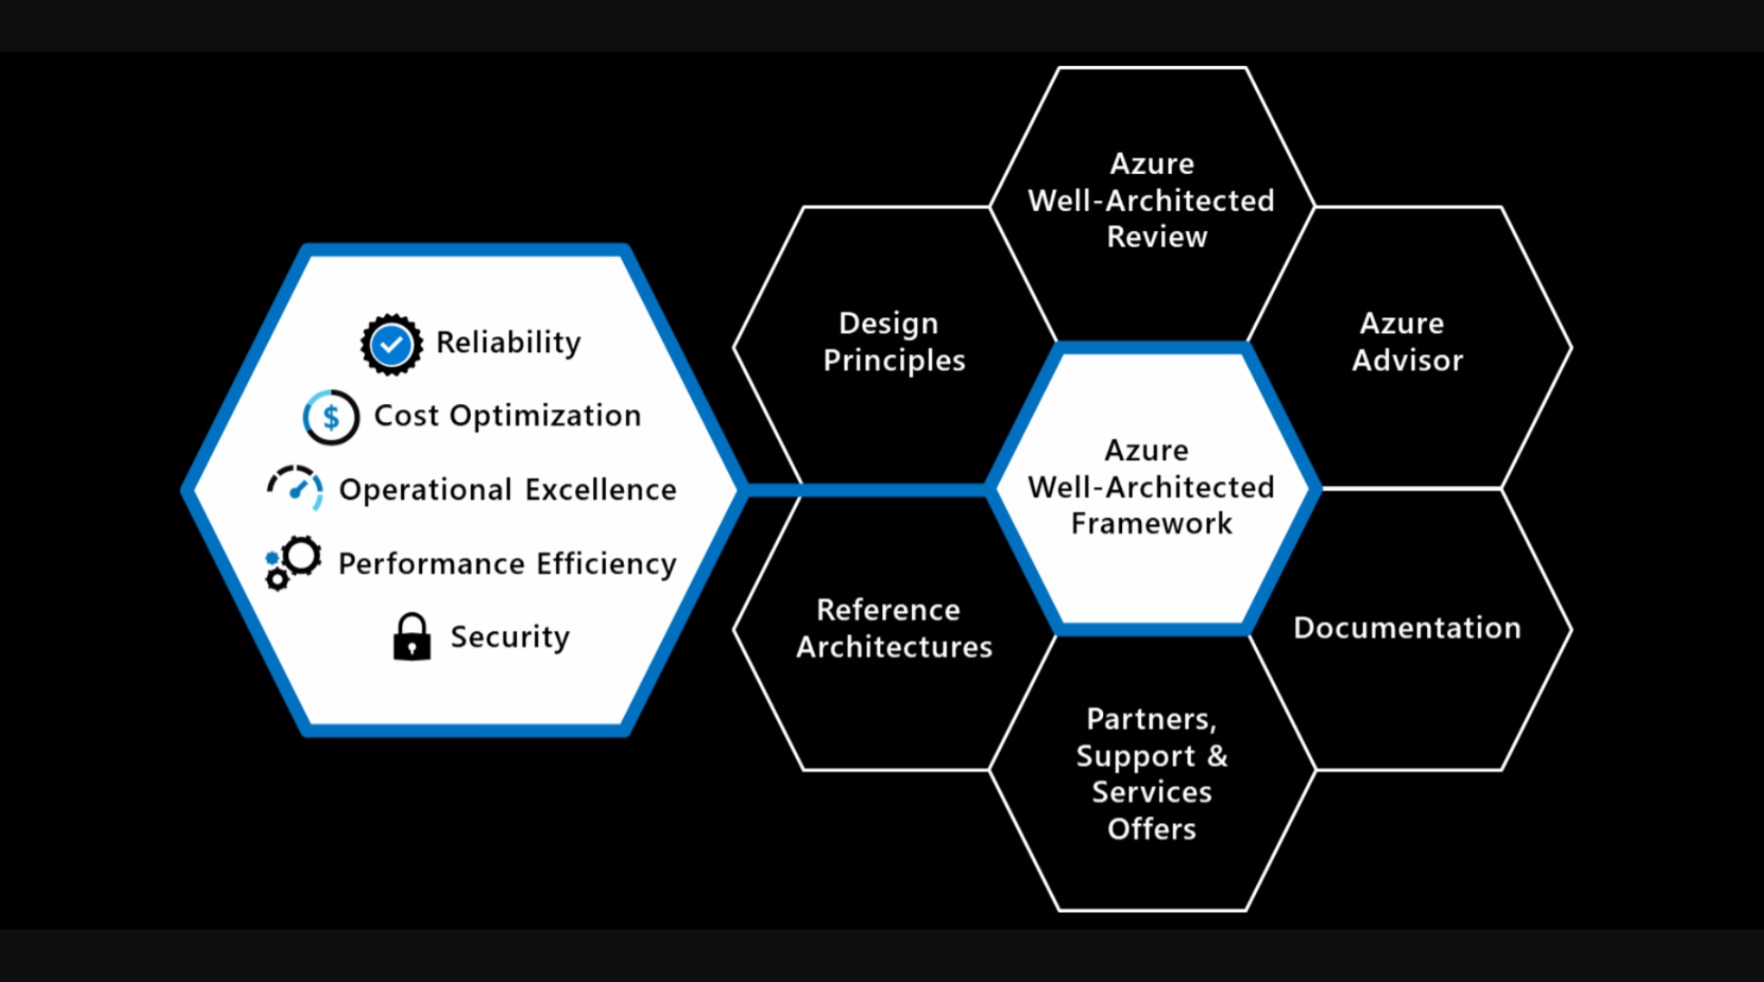 Well-Architected Framework 和支援專案的圖表。